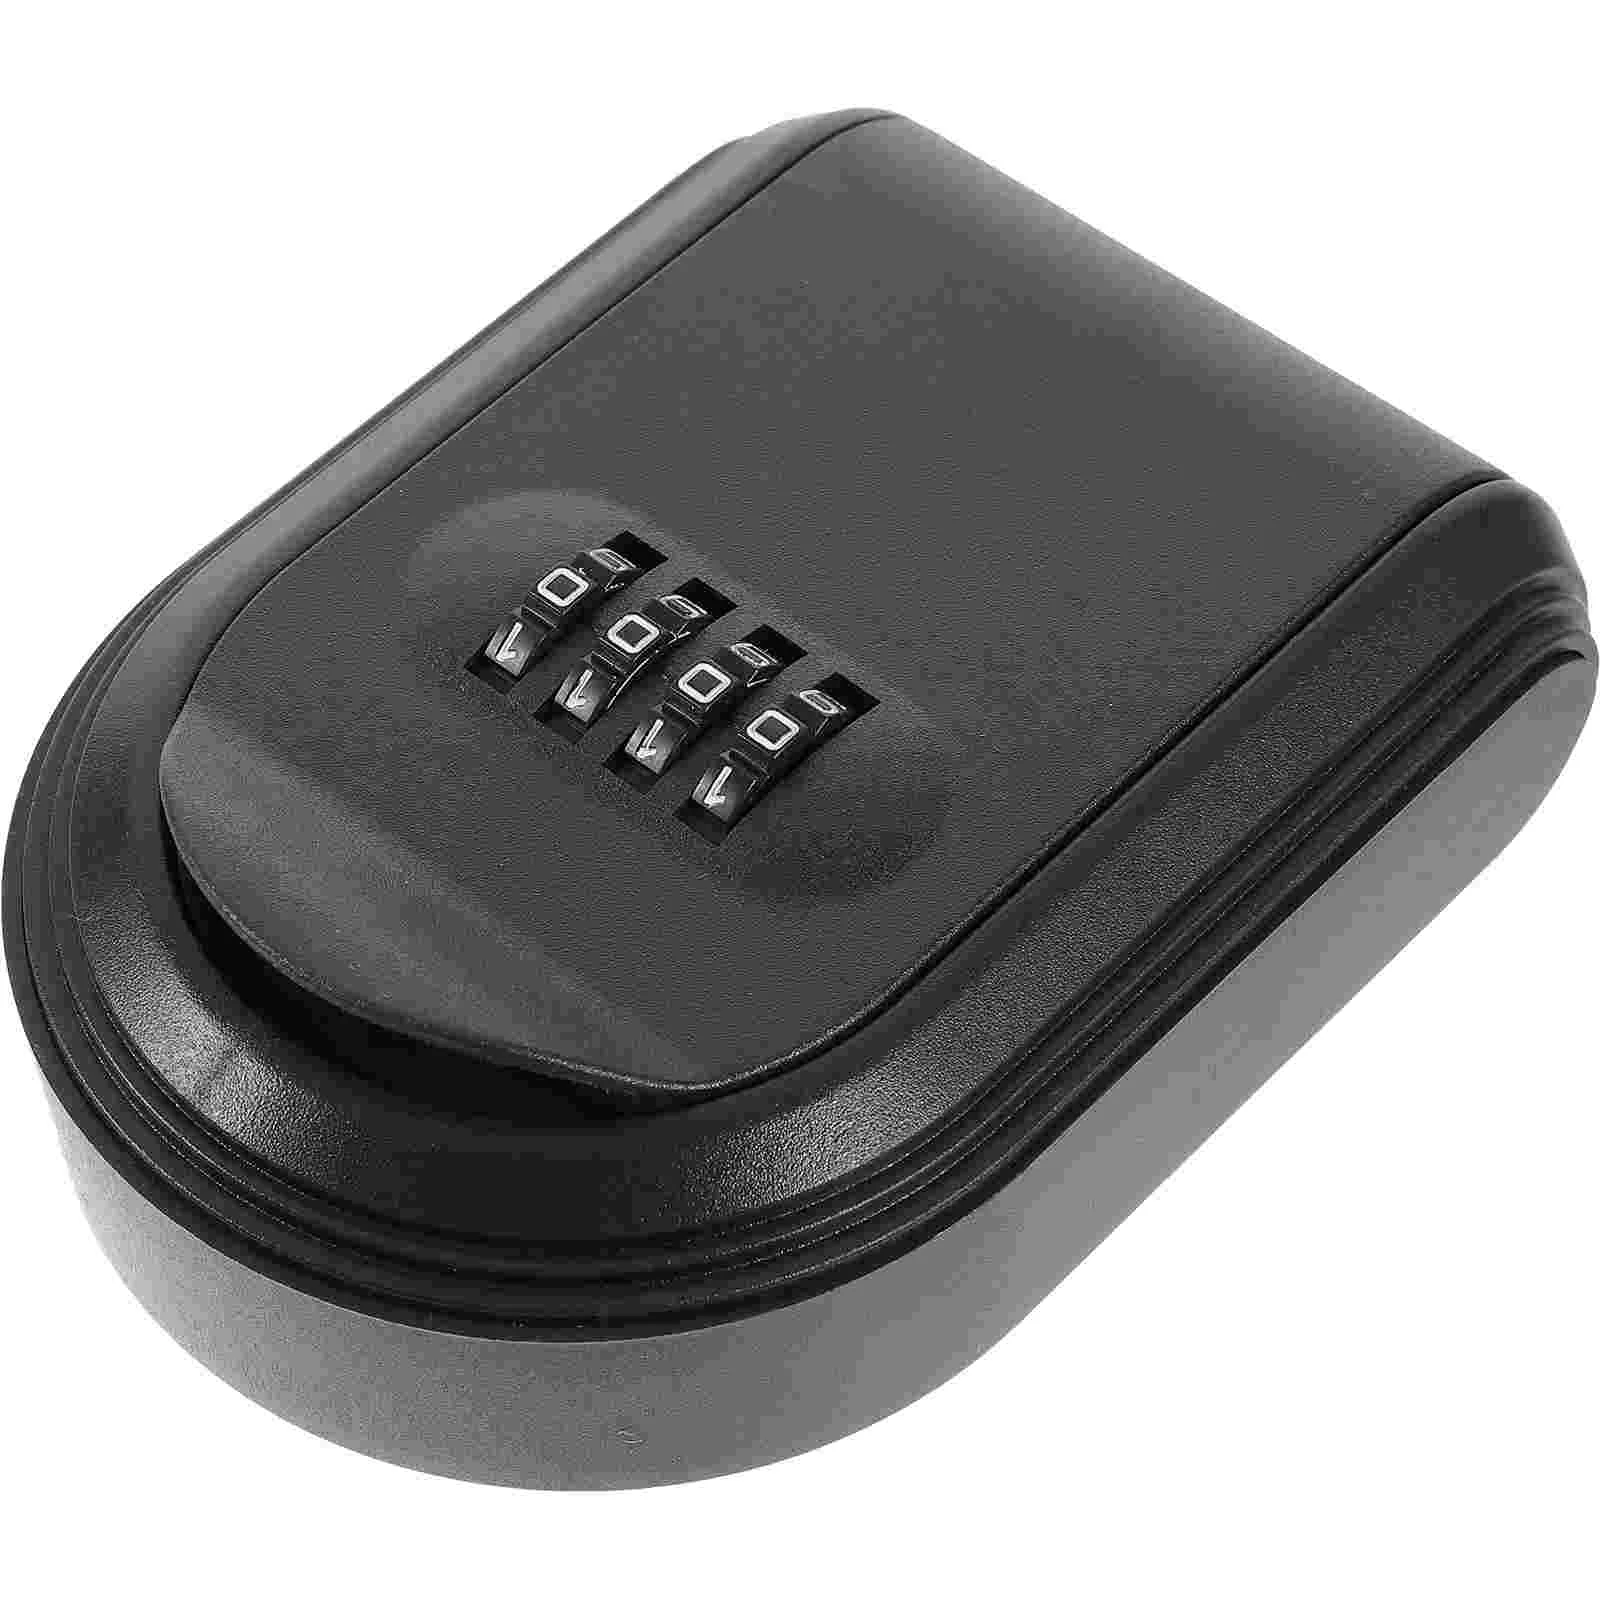 

Lock Box Key Password Door Wall Mounted Safe (Black) 1pc Holder Chain Lockbox Plastic Small for Keys Outdoor